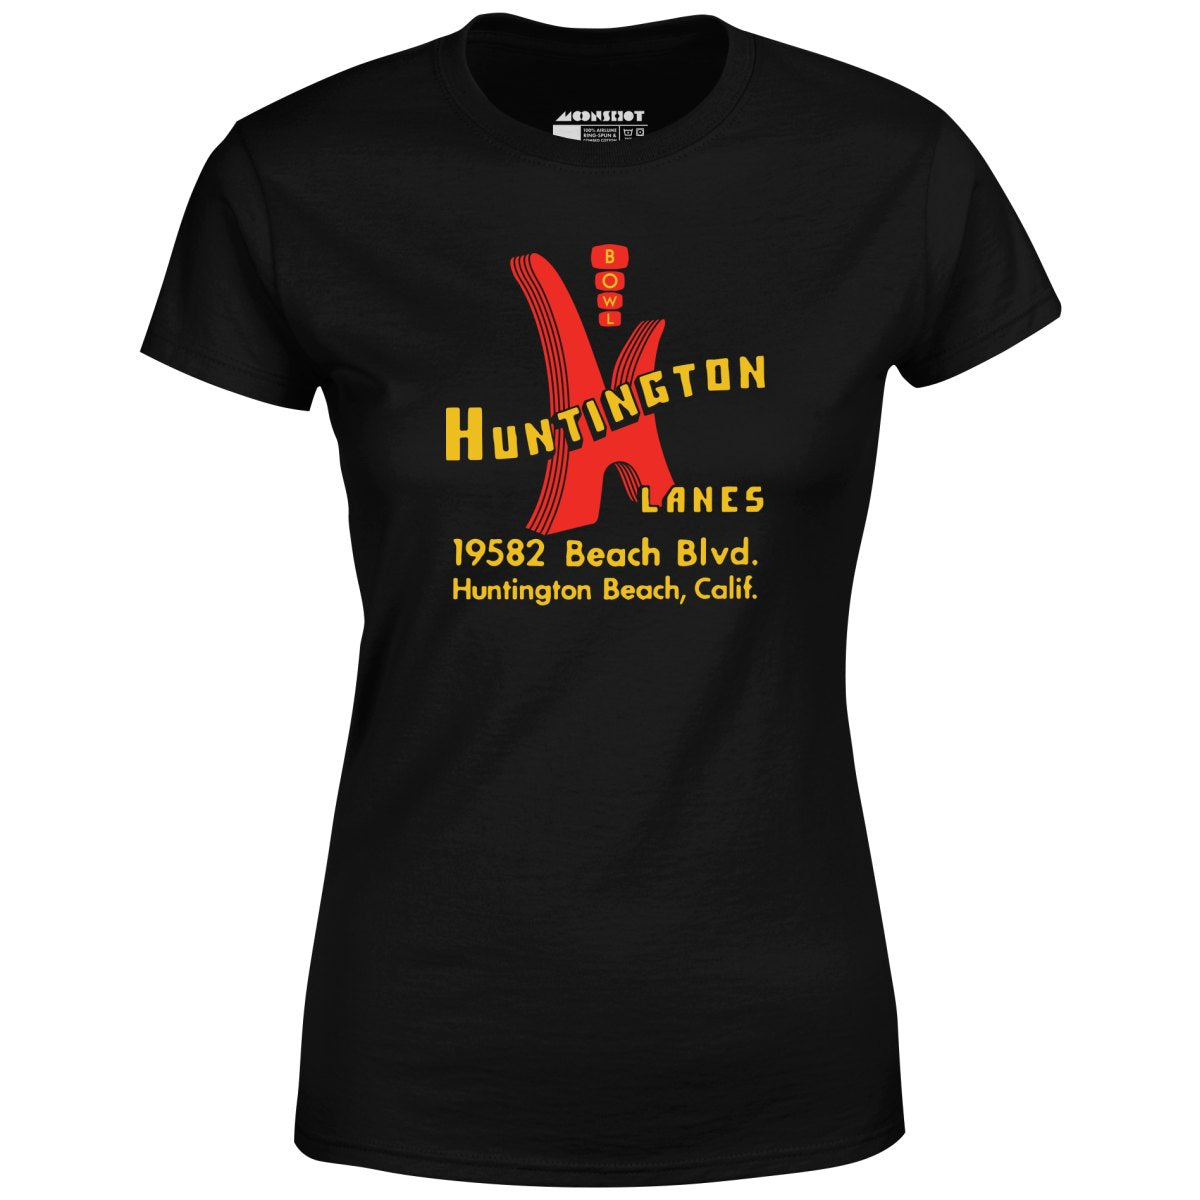 Huntington Lanes - Huntington Beach, CA - Vintage Bowling Alley - Women's T-Shirt